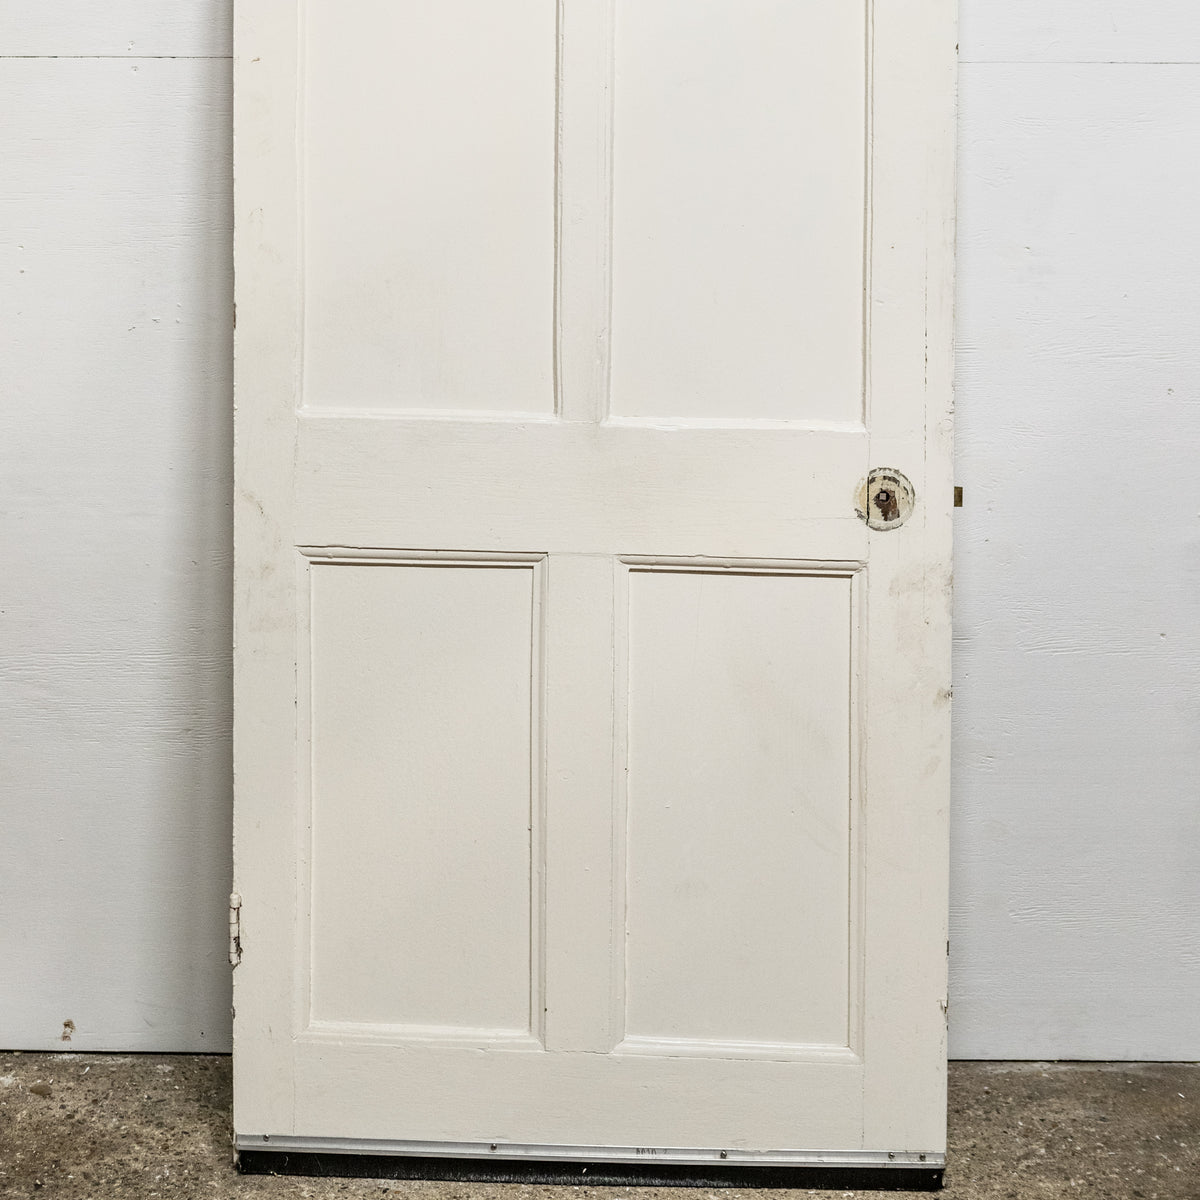 Antique Reclaimed Victorian 4 Panel Door - 184cm x 80cm | The Architectural Forum